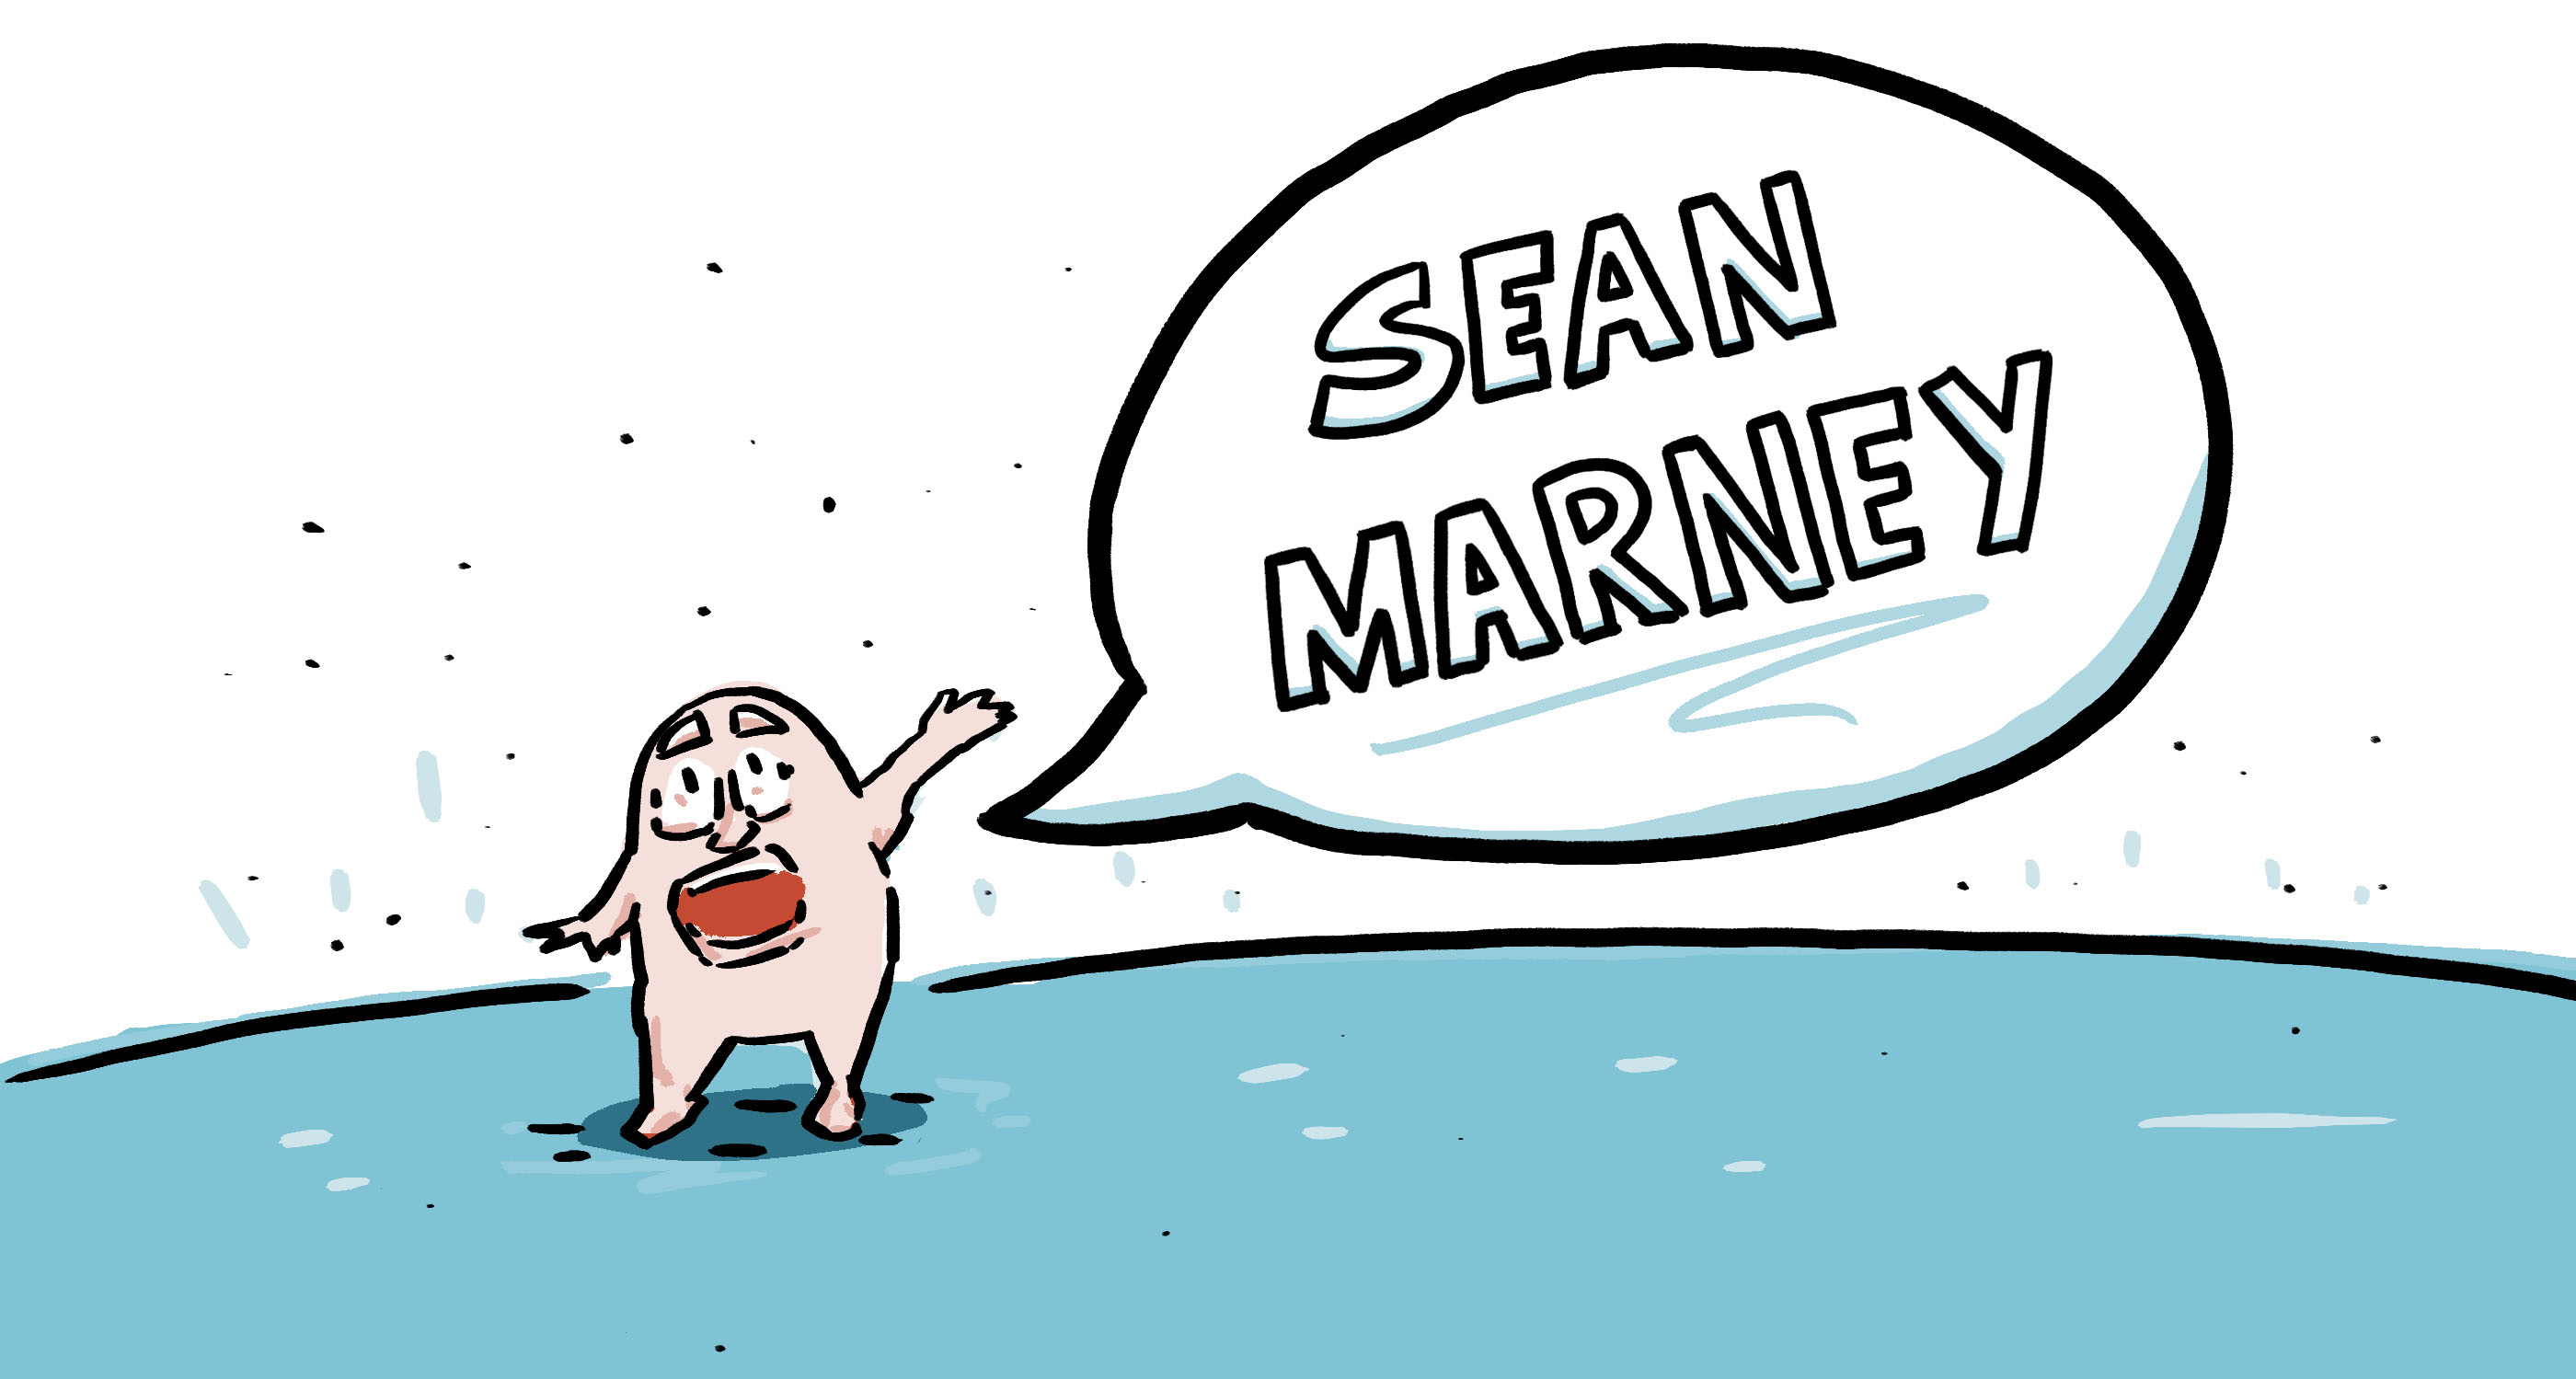 Sean Marney